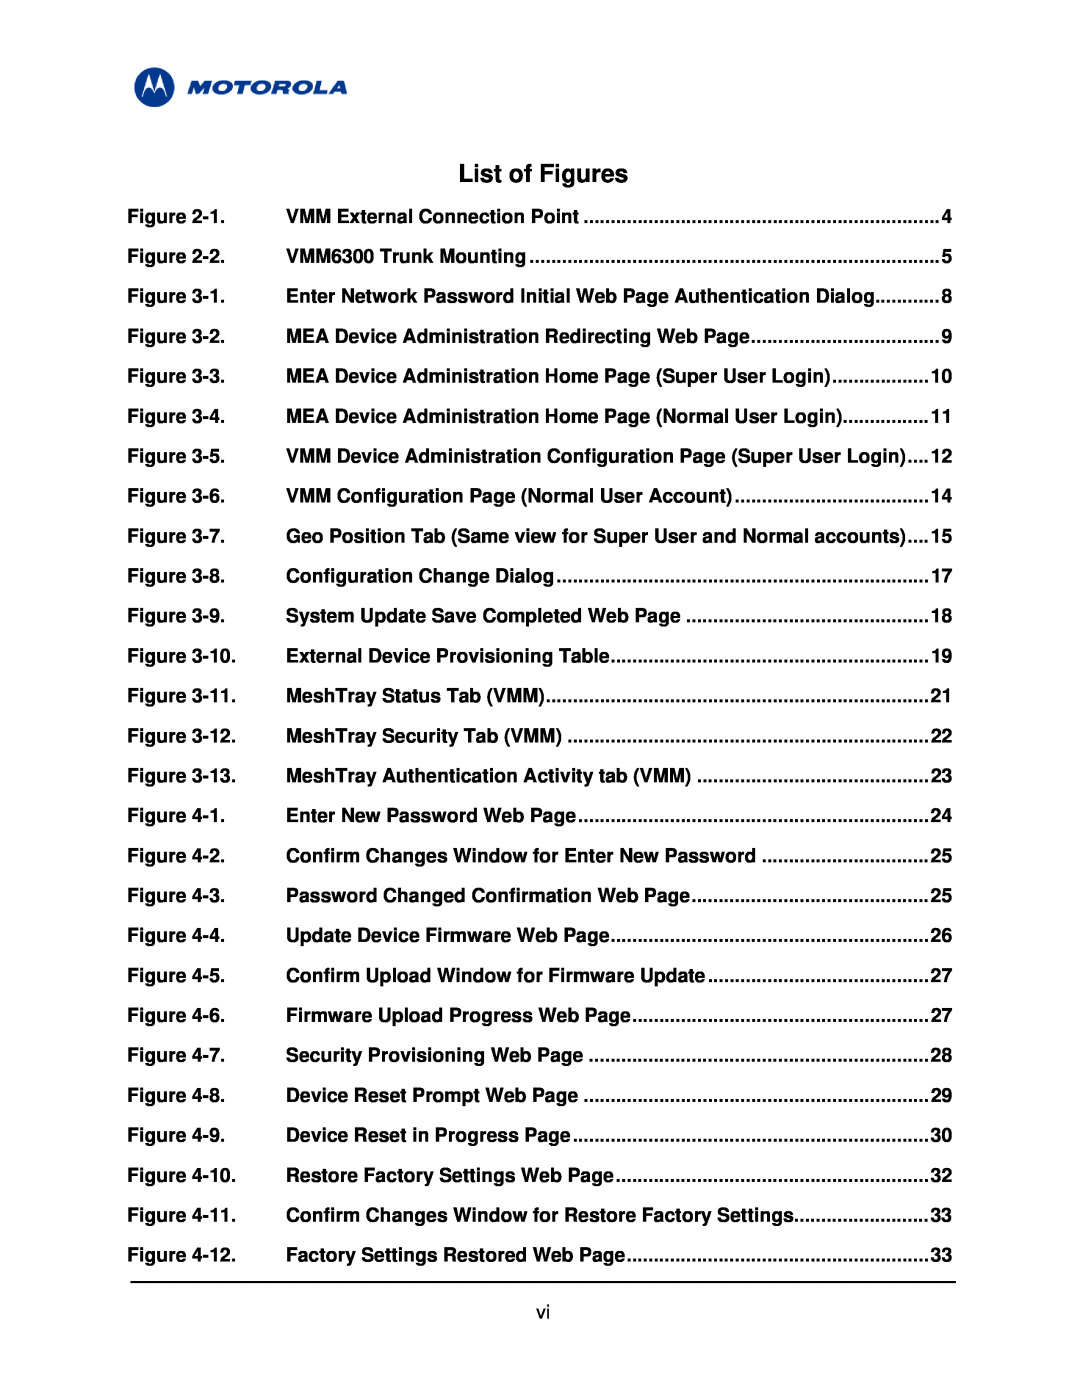 Motorola 3.1 manual List of Figures, MEA Device Administration Home Page Super User Login, Configuration Change Dialog 